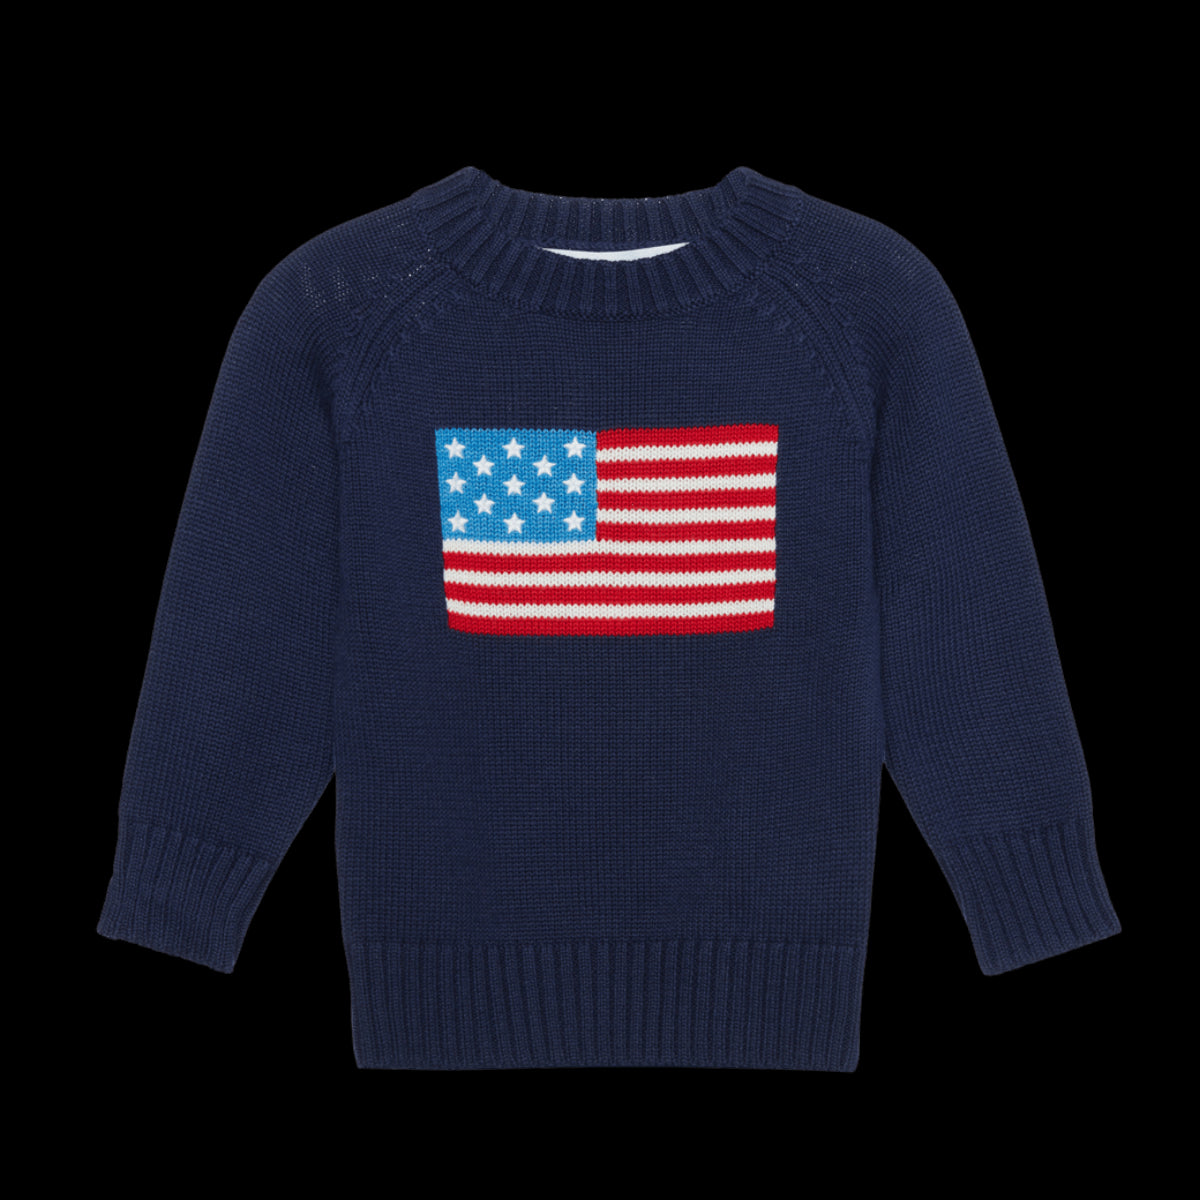 Kid's navy American flag sweater